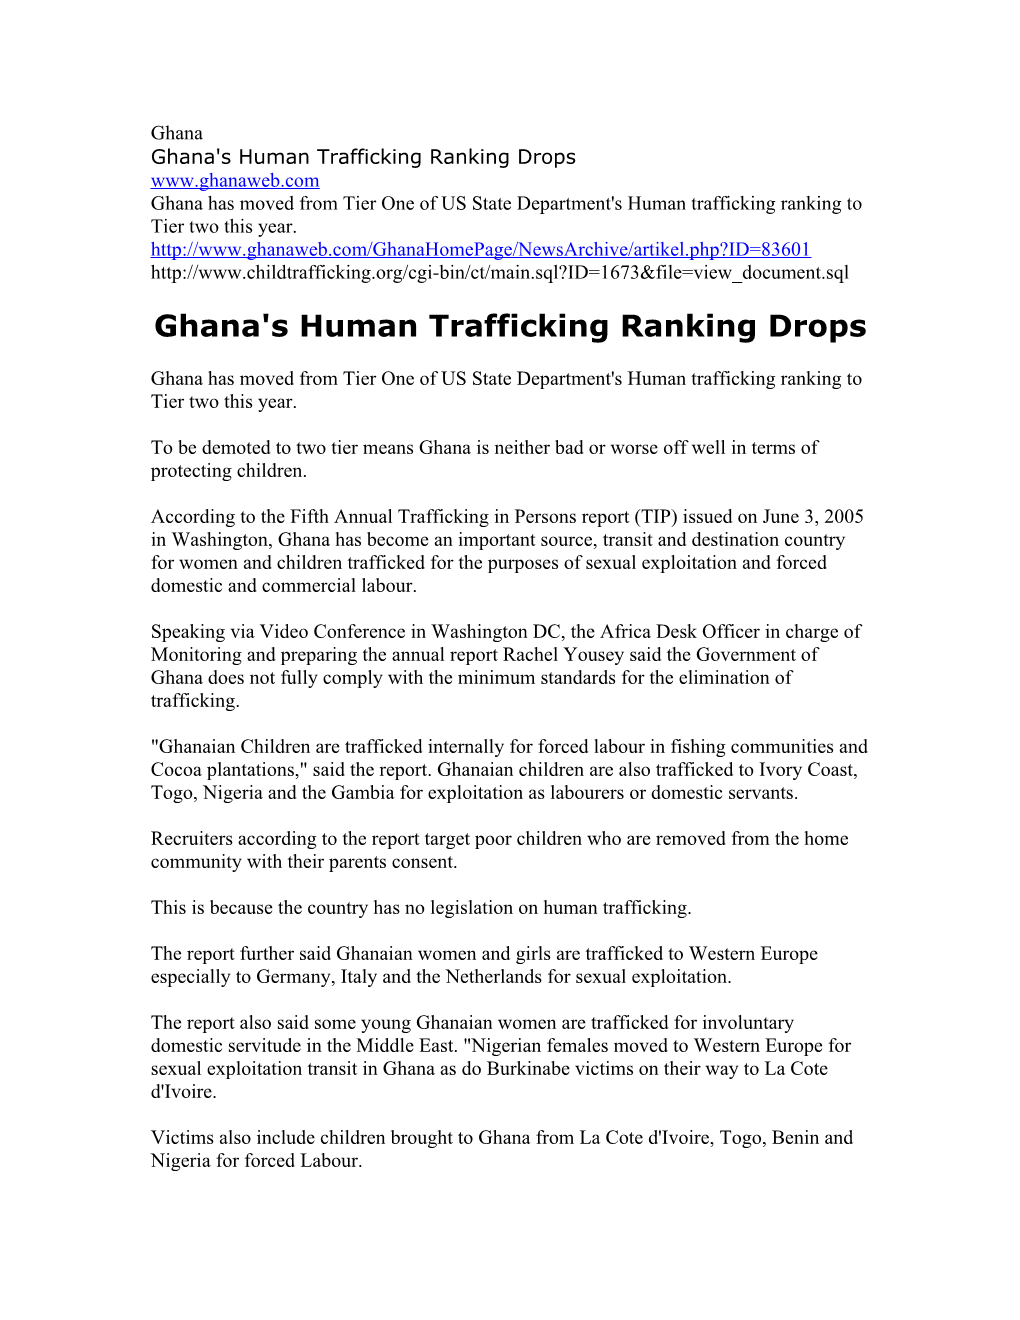 Ghana's Human Trafficking Ranking Drops